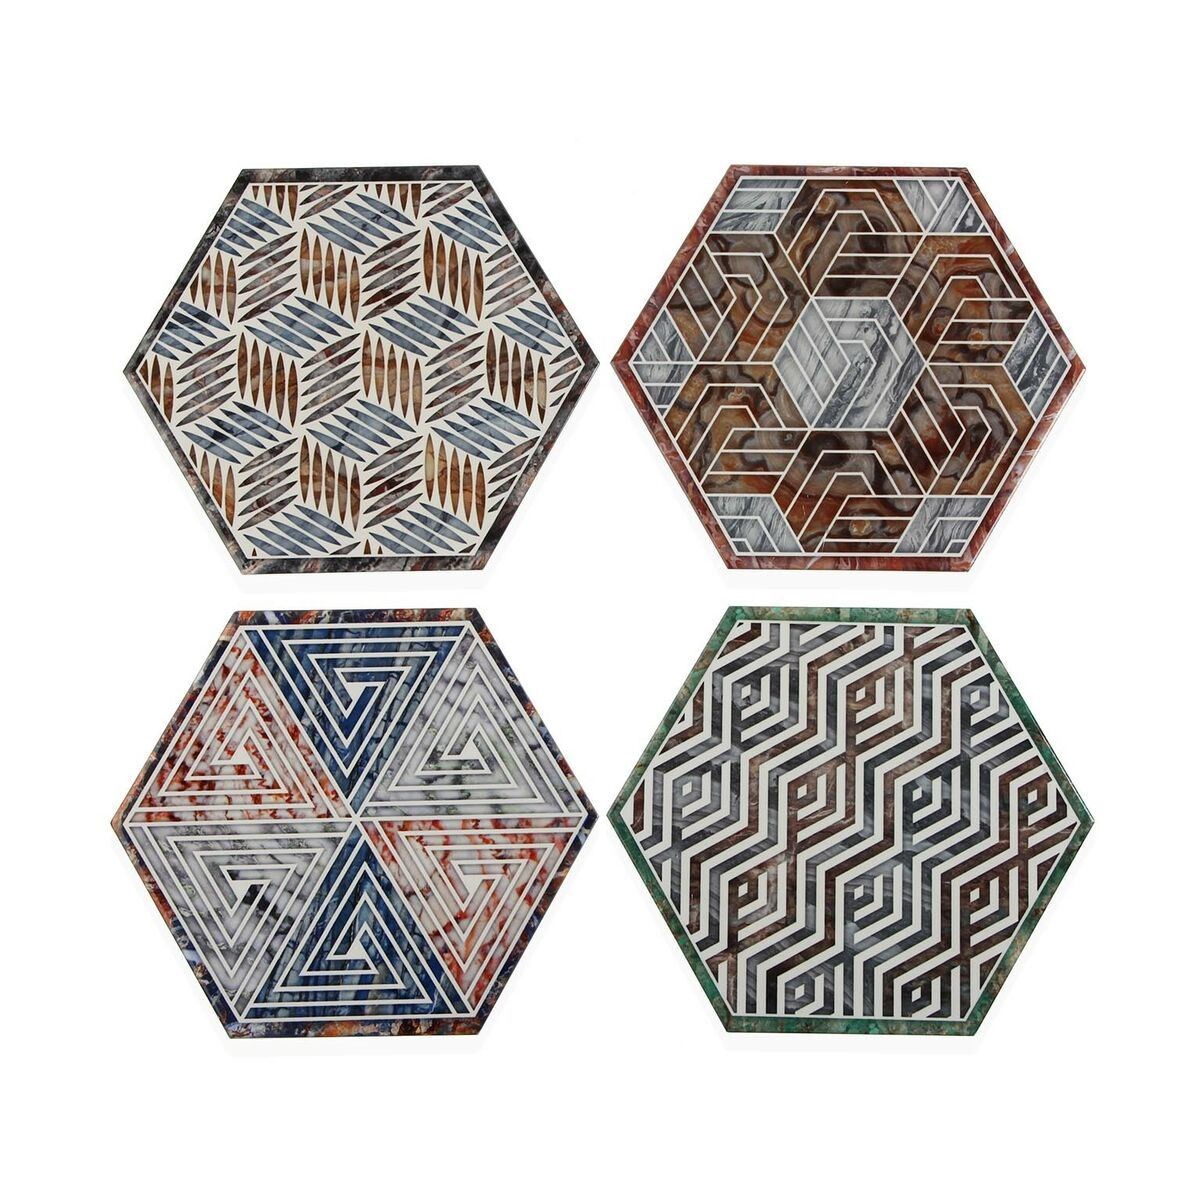 Suport pahar - Hexagonal - Mai multe modele | Versa